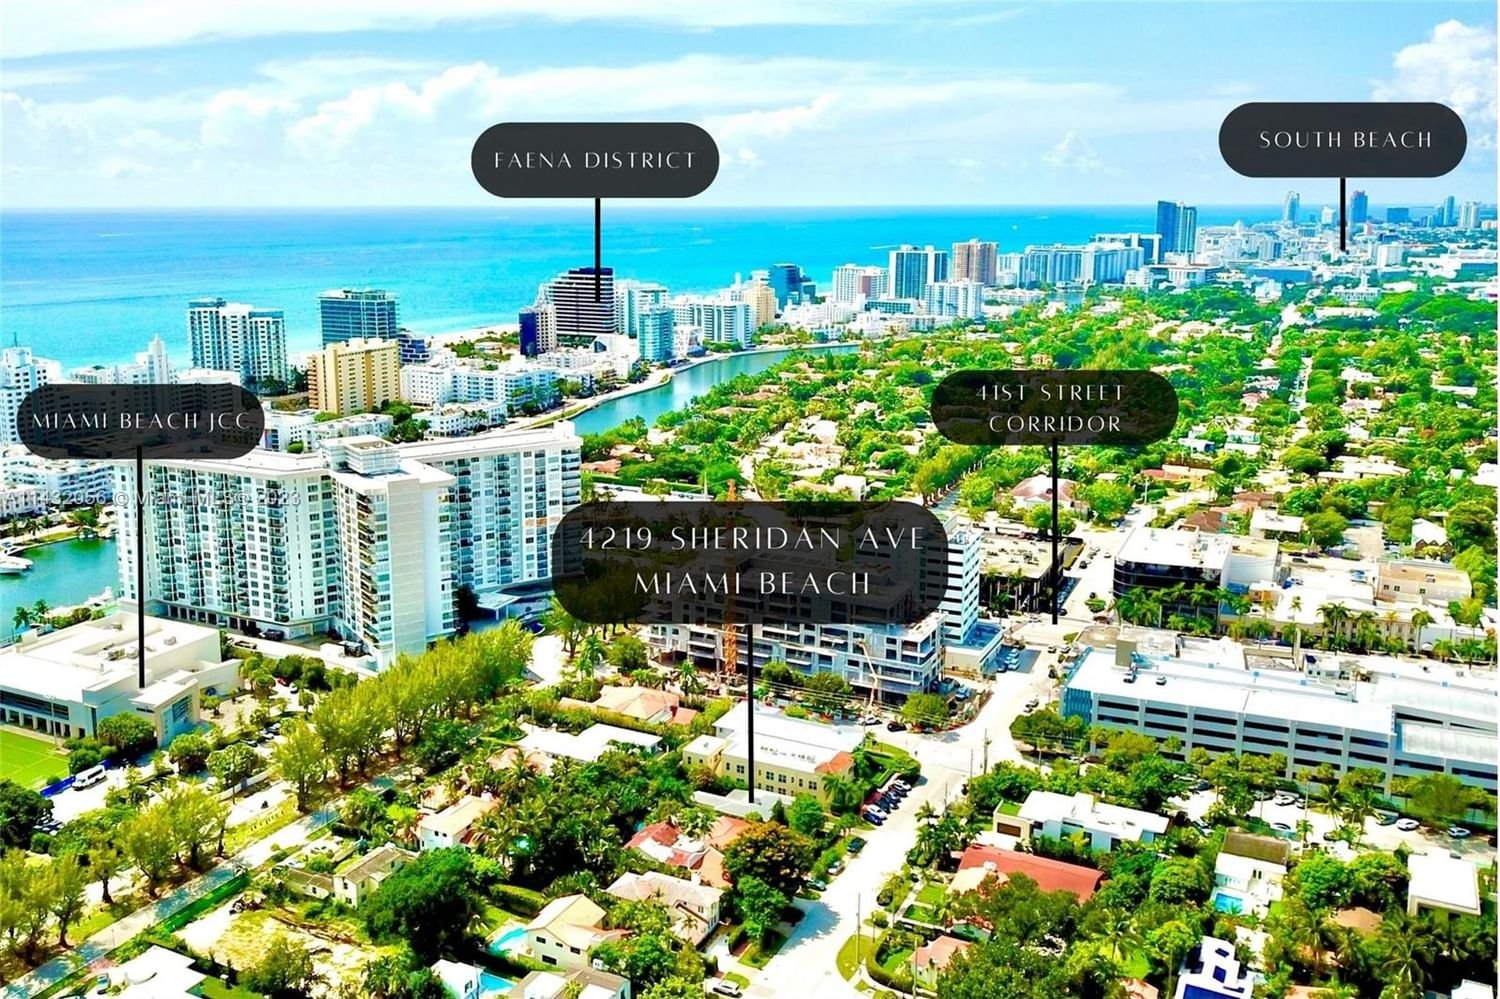 Real estate property located at 4219 Sheridan Ave, Miami-Dade County, Miami Beach, FL